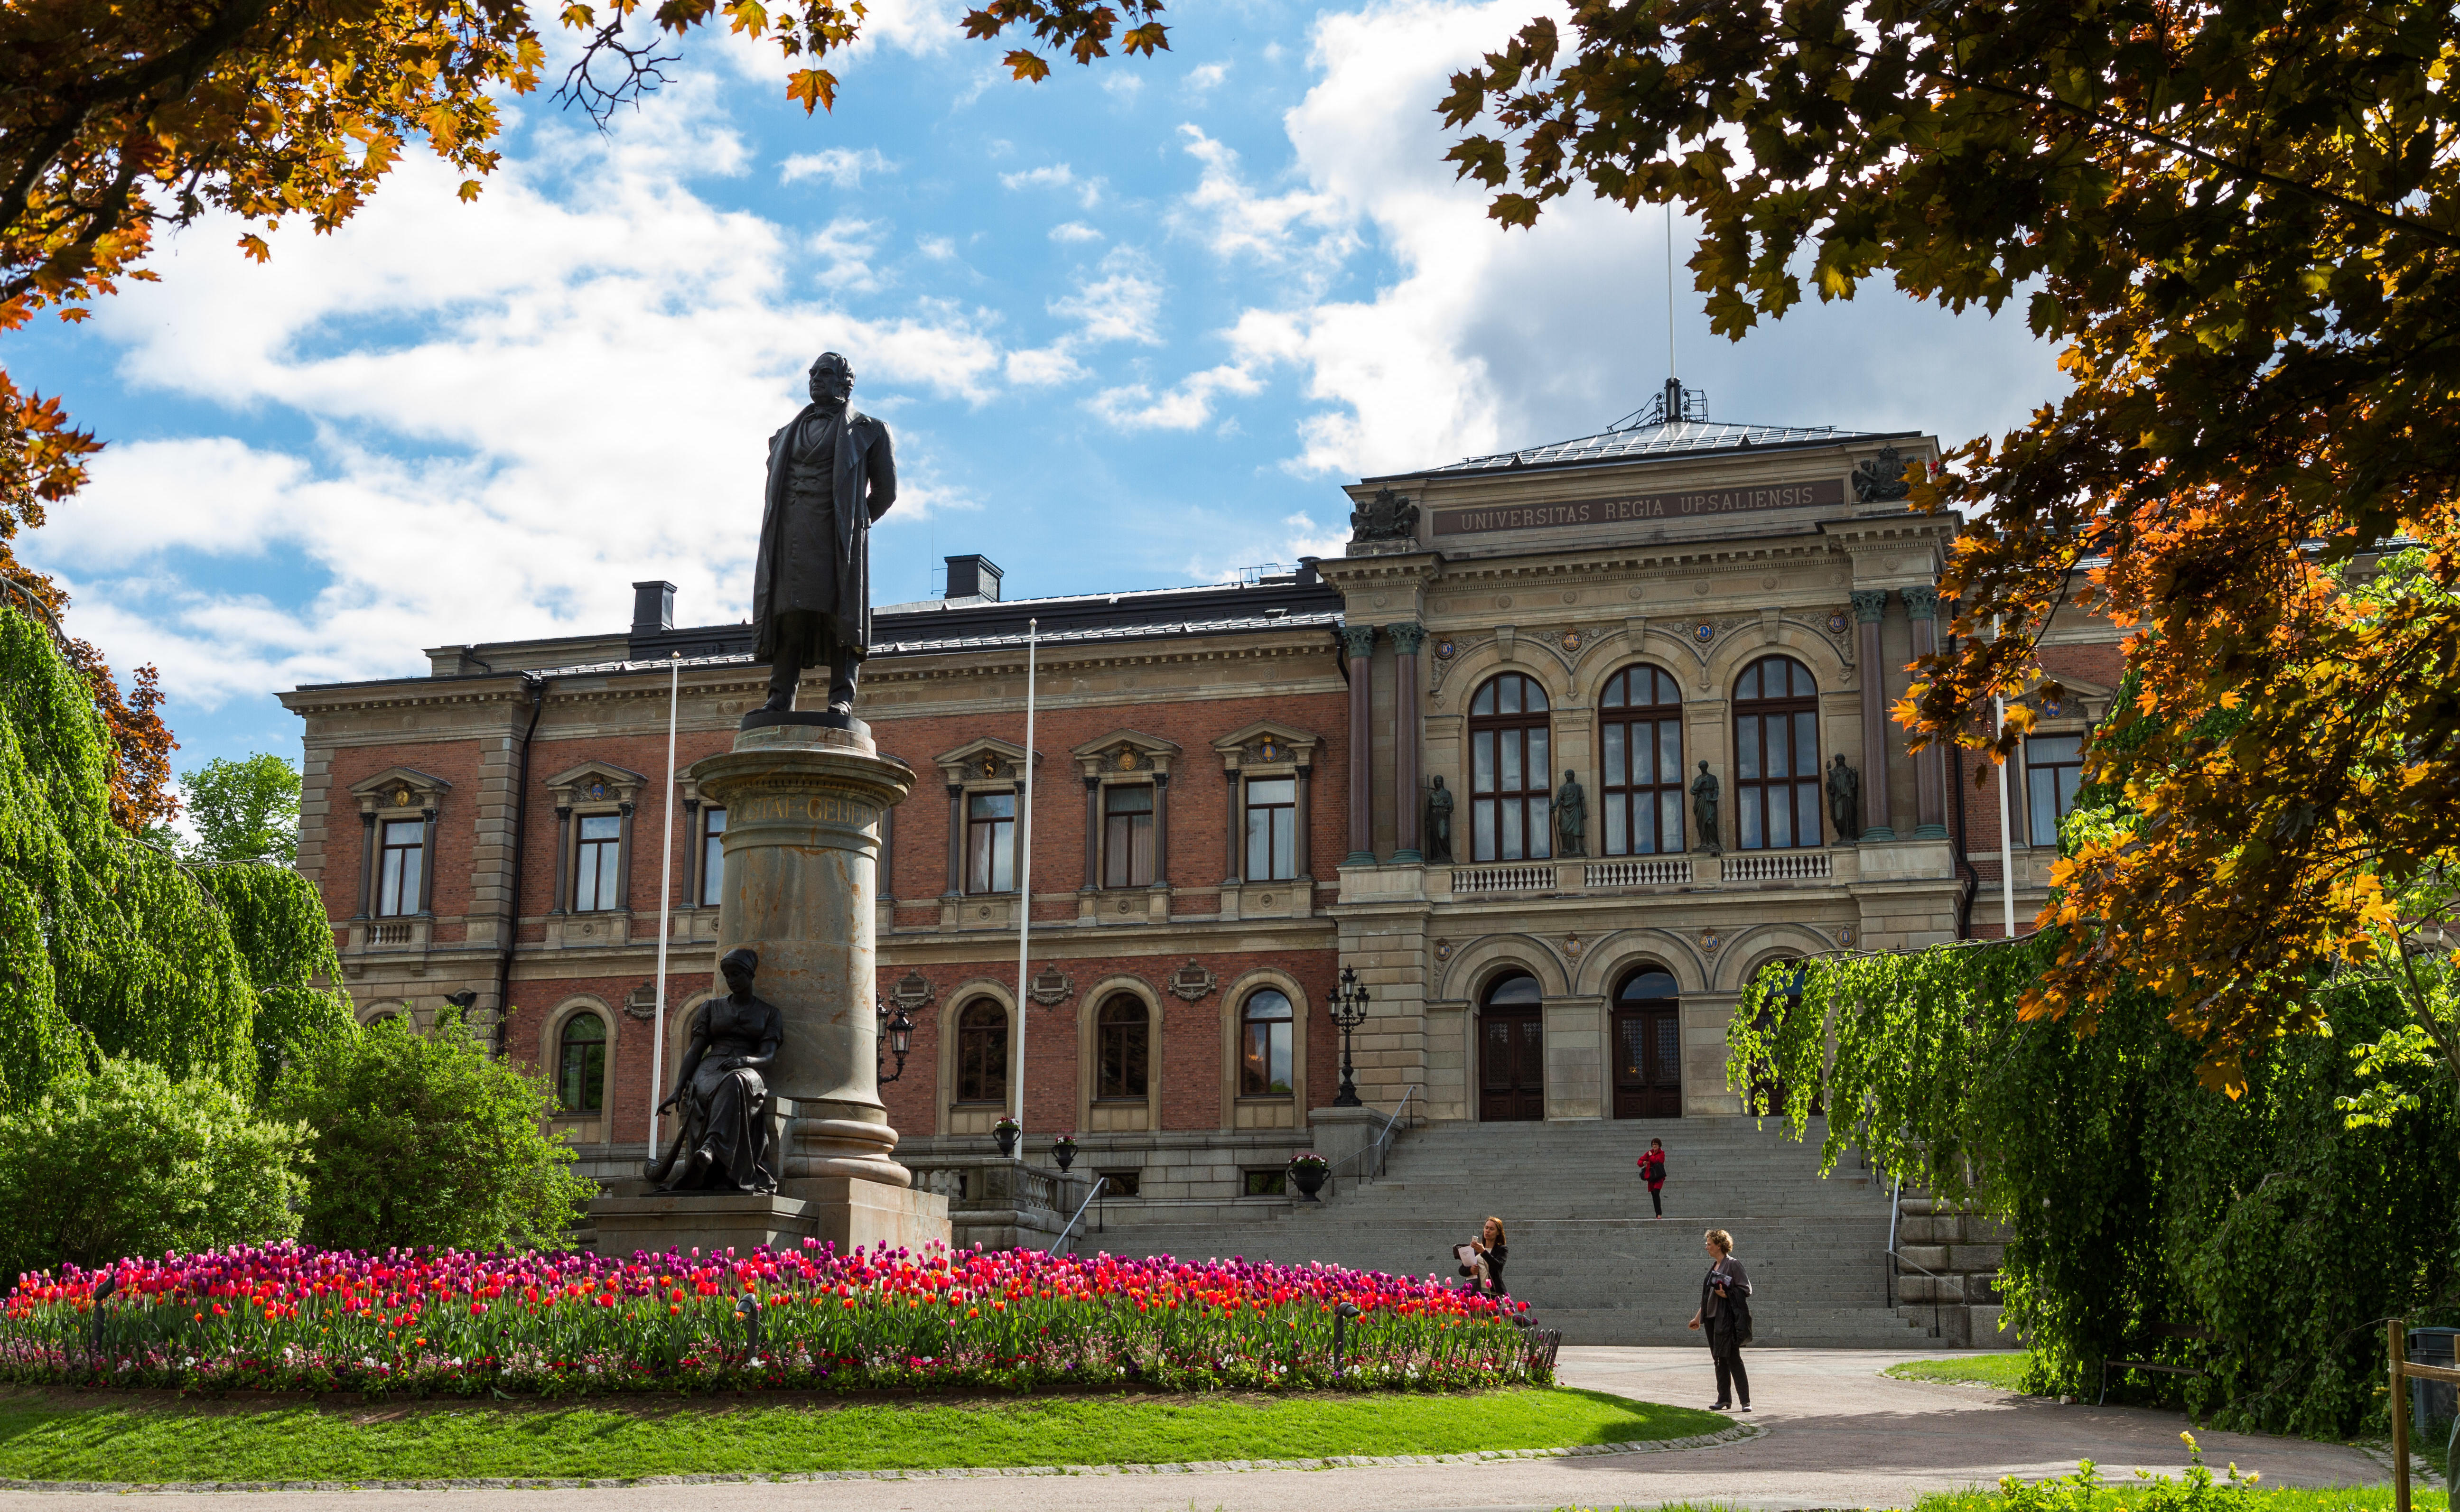 Uppsala University campus building and statue